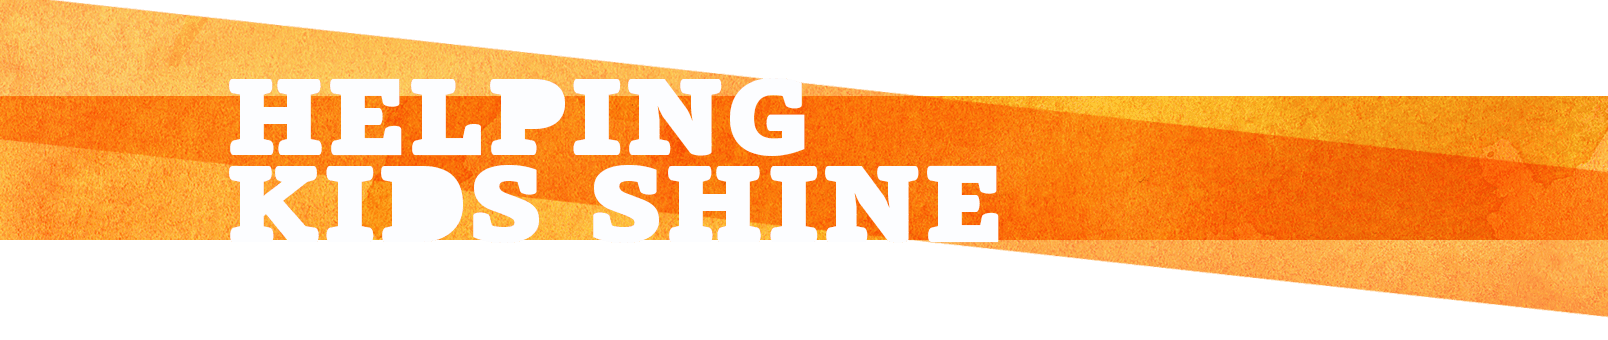 Helping Kids Shine - Illustration